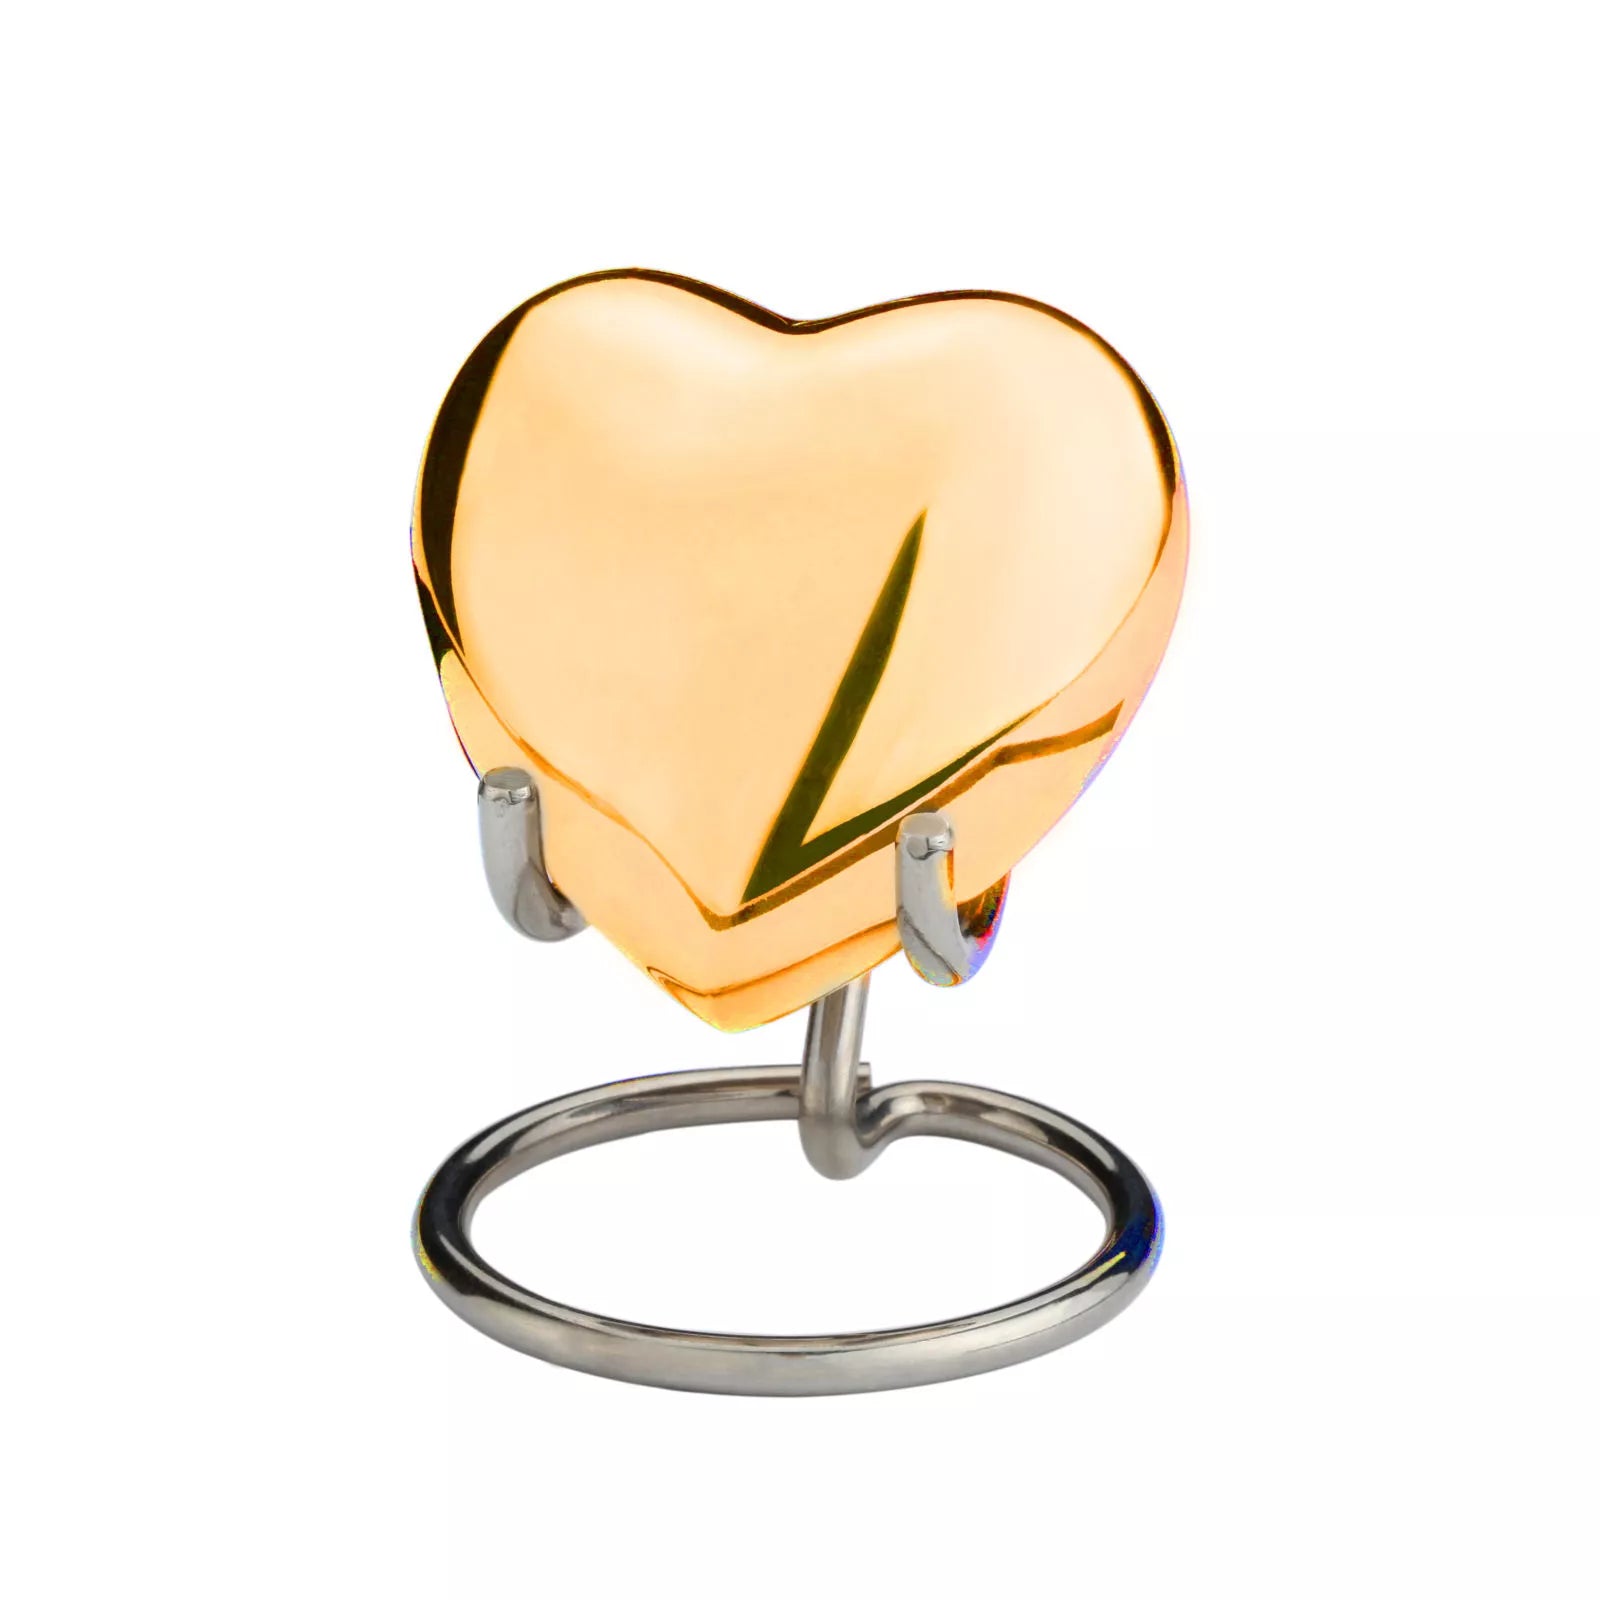 Brass mini urn - heart-shaped